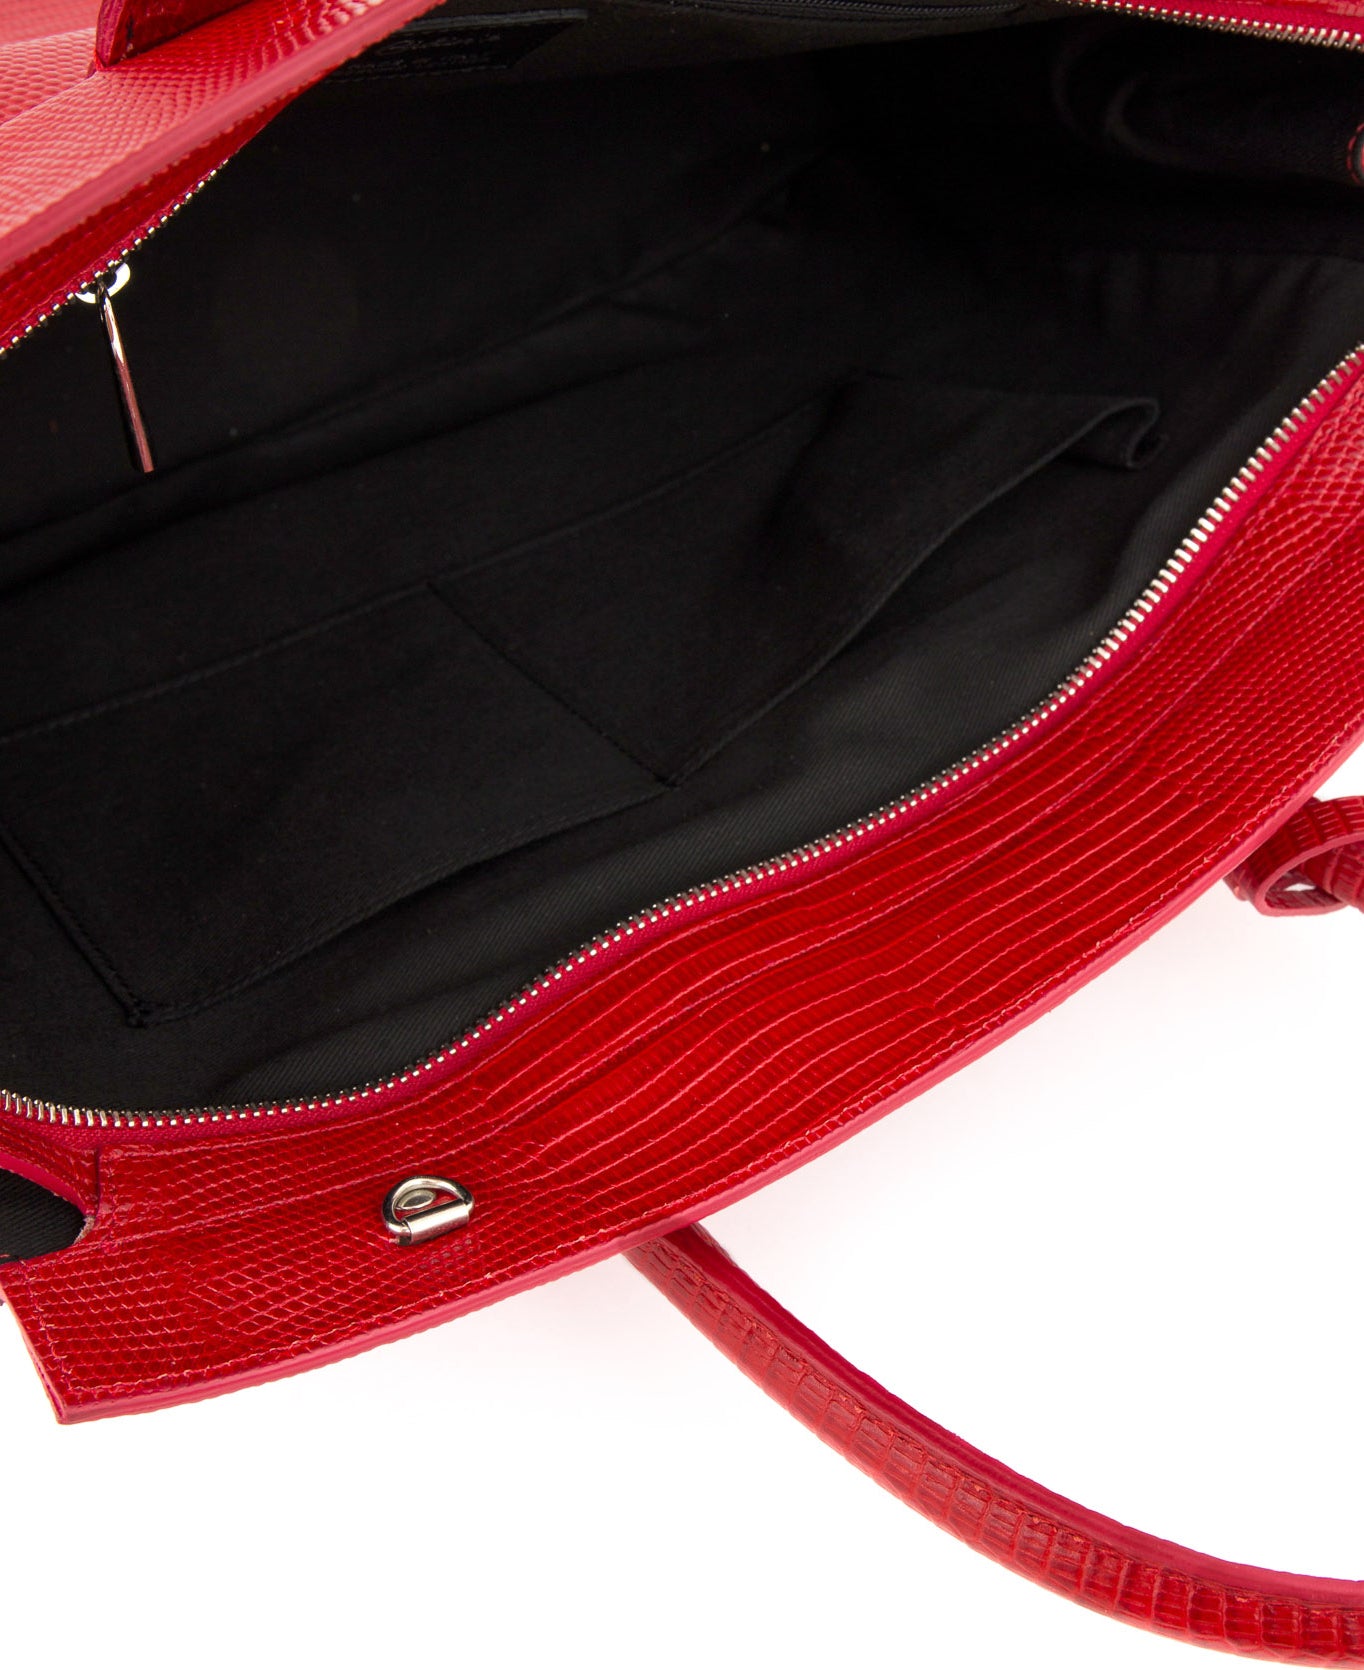 Luigia Leather Bag Lizard Print Red